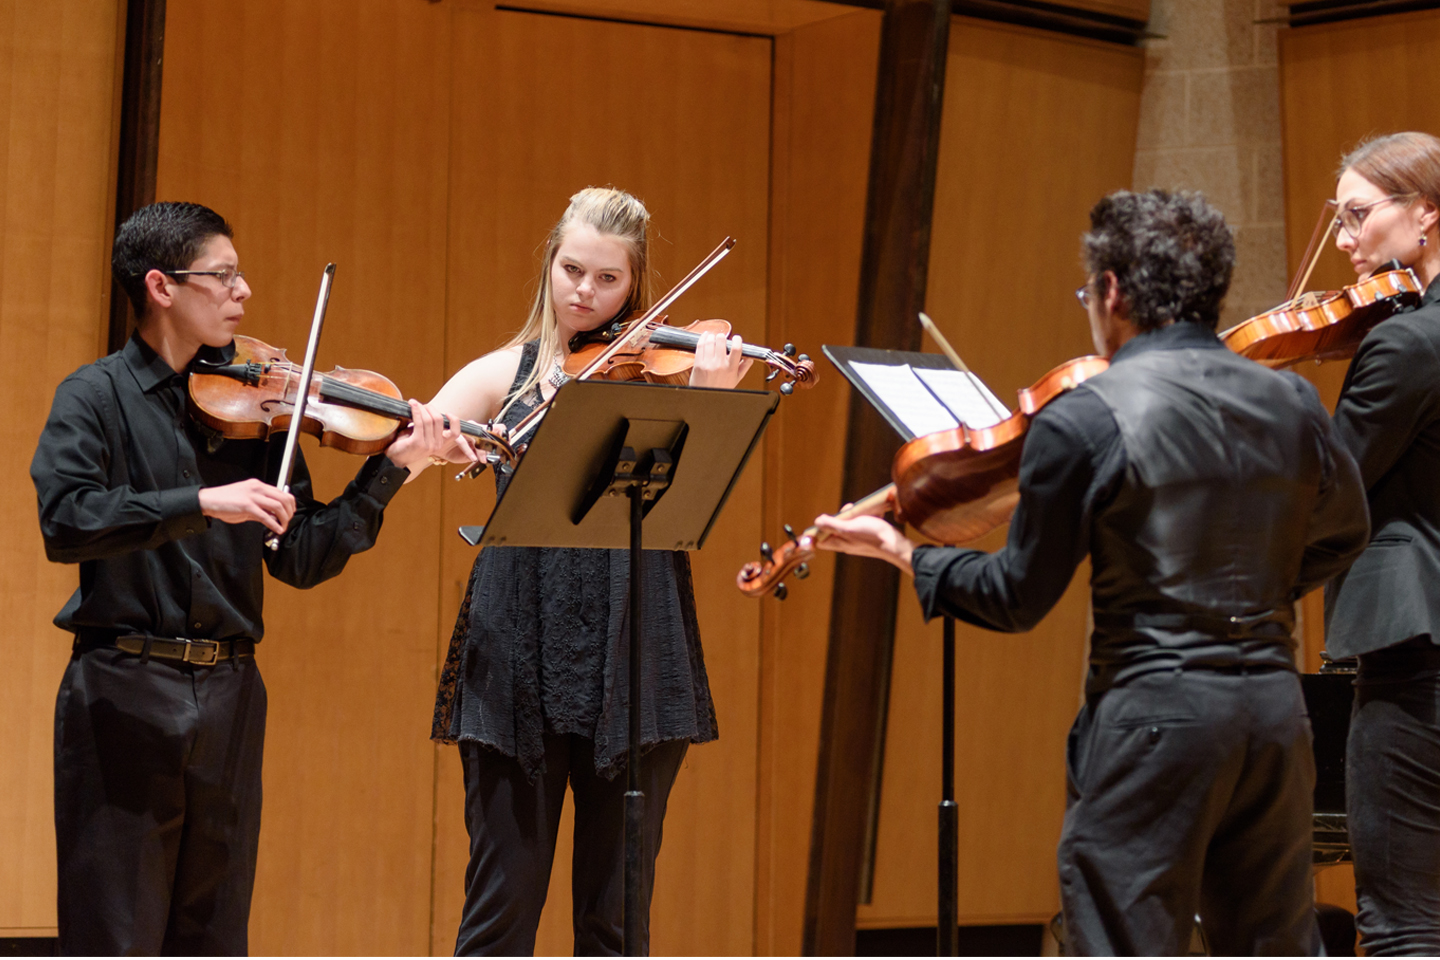 Three violinist and a violist perform on a stage